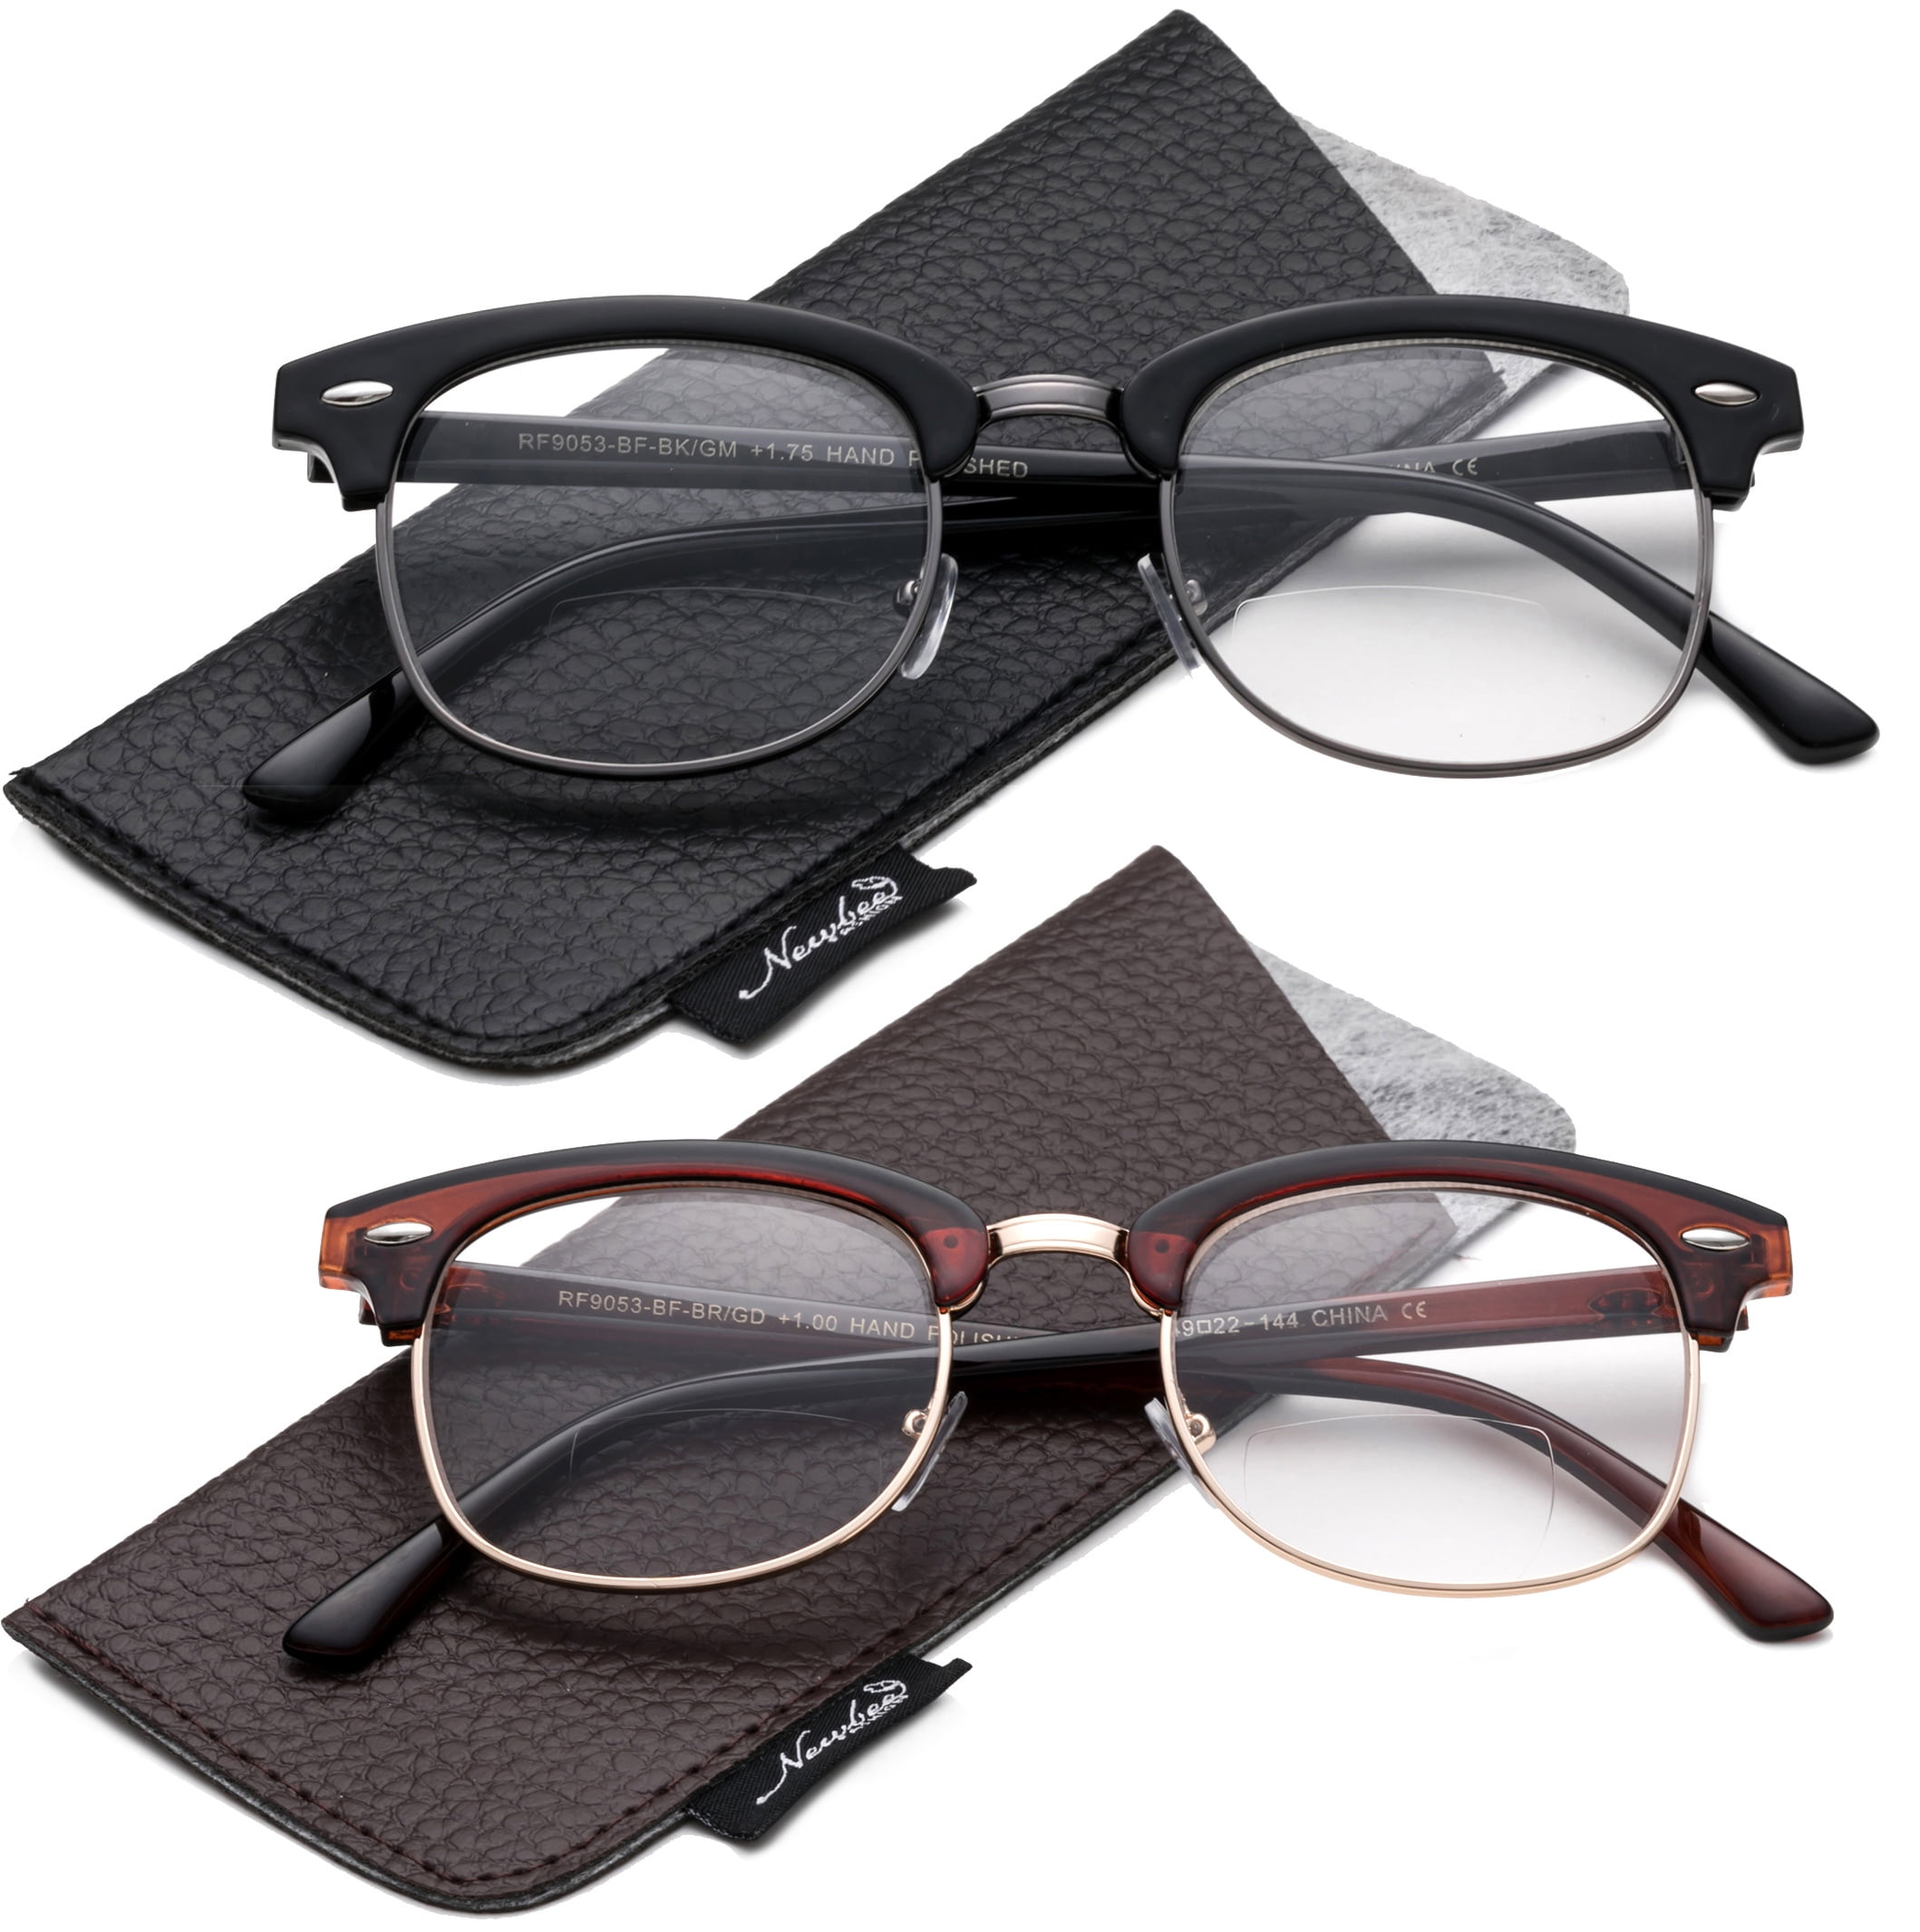 Buy 2 Packs Bifocal Reading Glasses Half Frame Vintage Retro Stylish And Fashion Reading Glasses